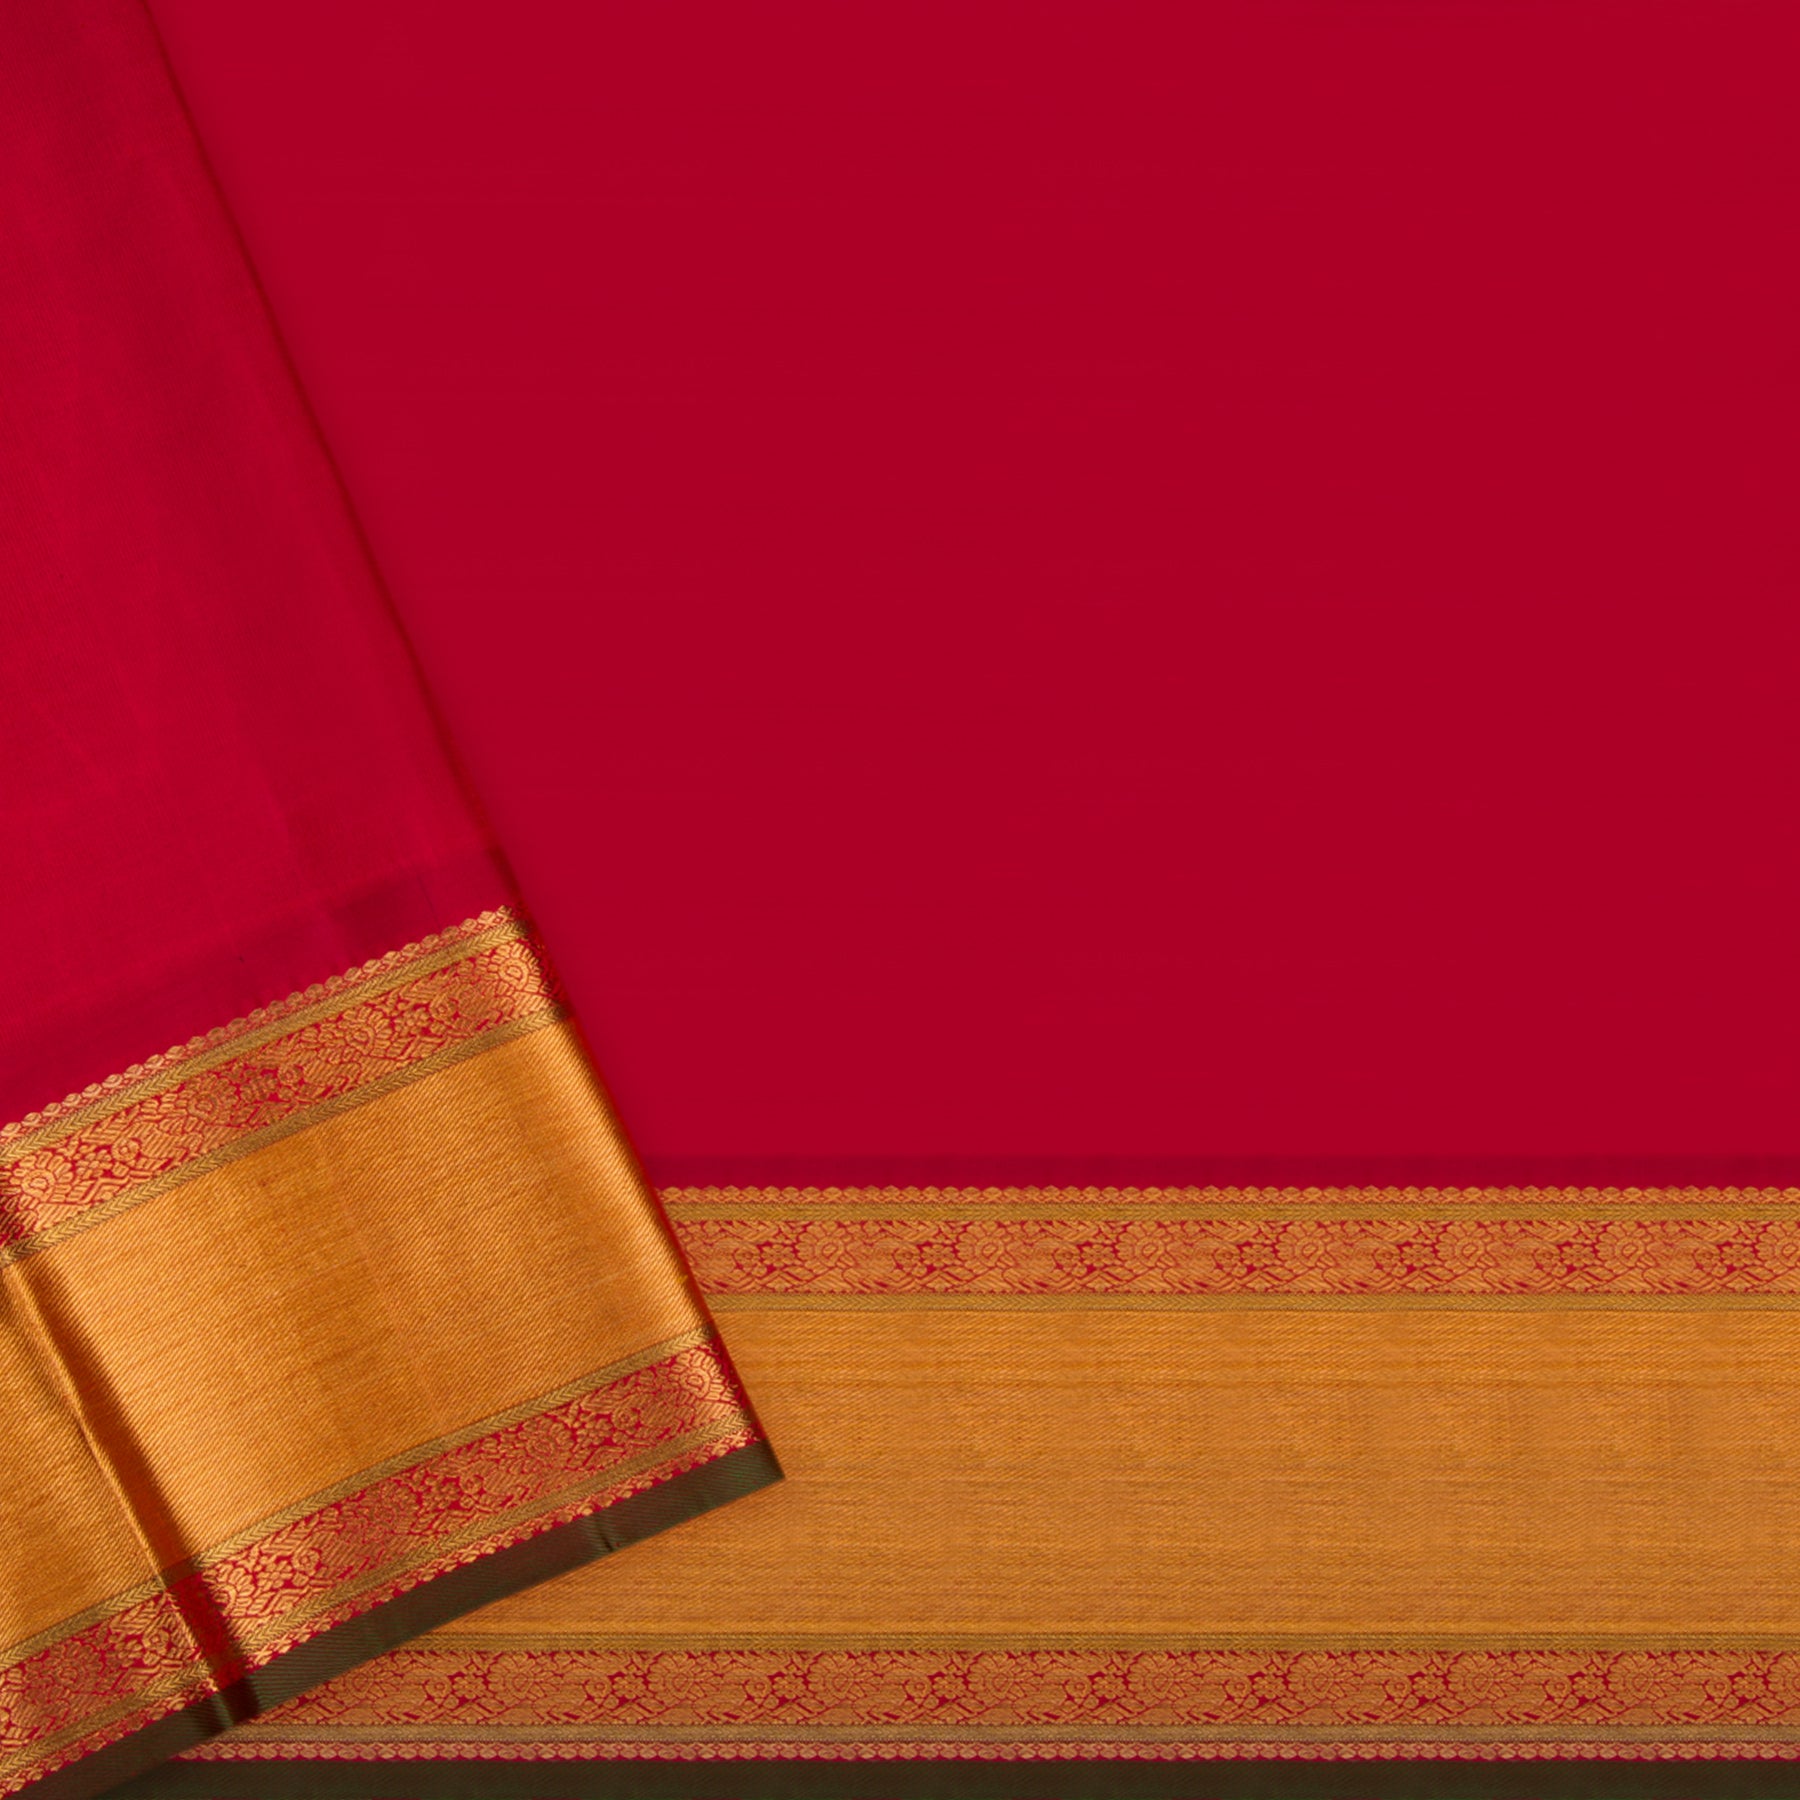 Kanakavalli Kanjivaram Silk Sari 23-110-HS001-00068 - Blouse View